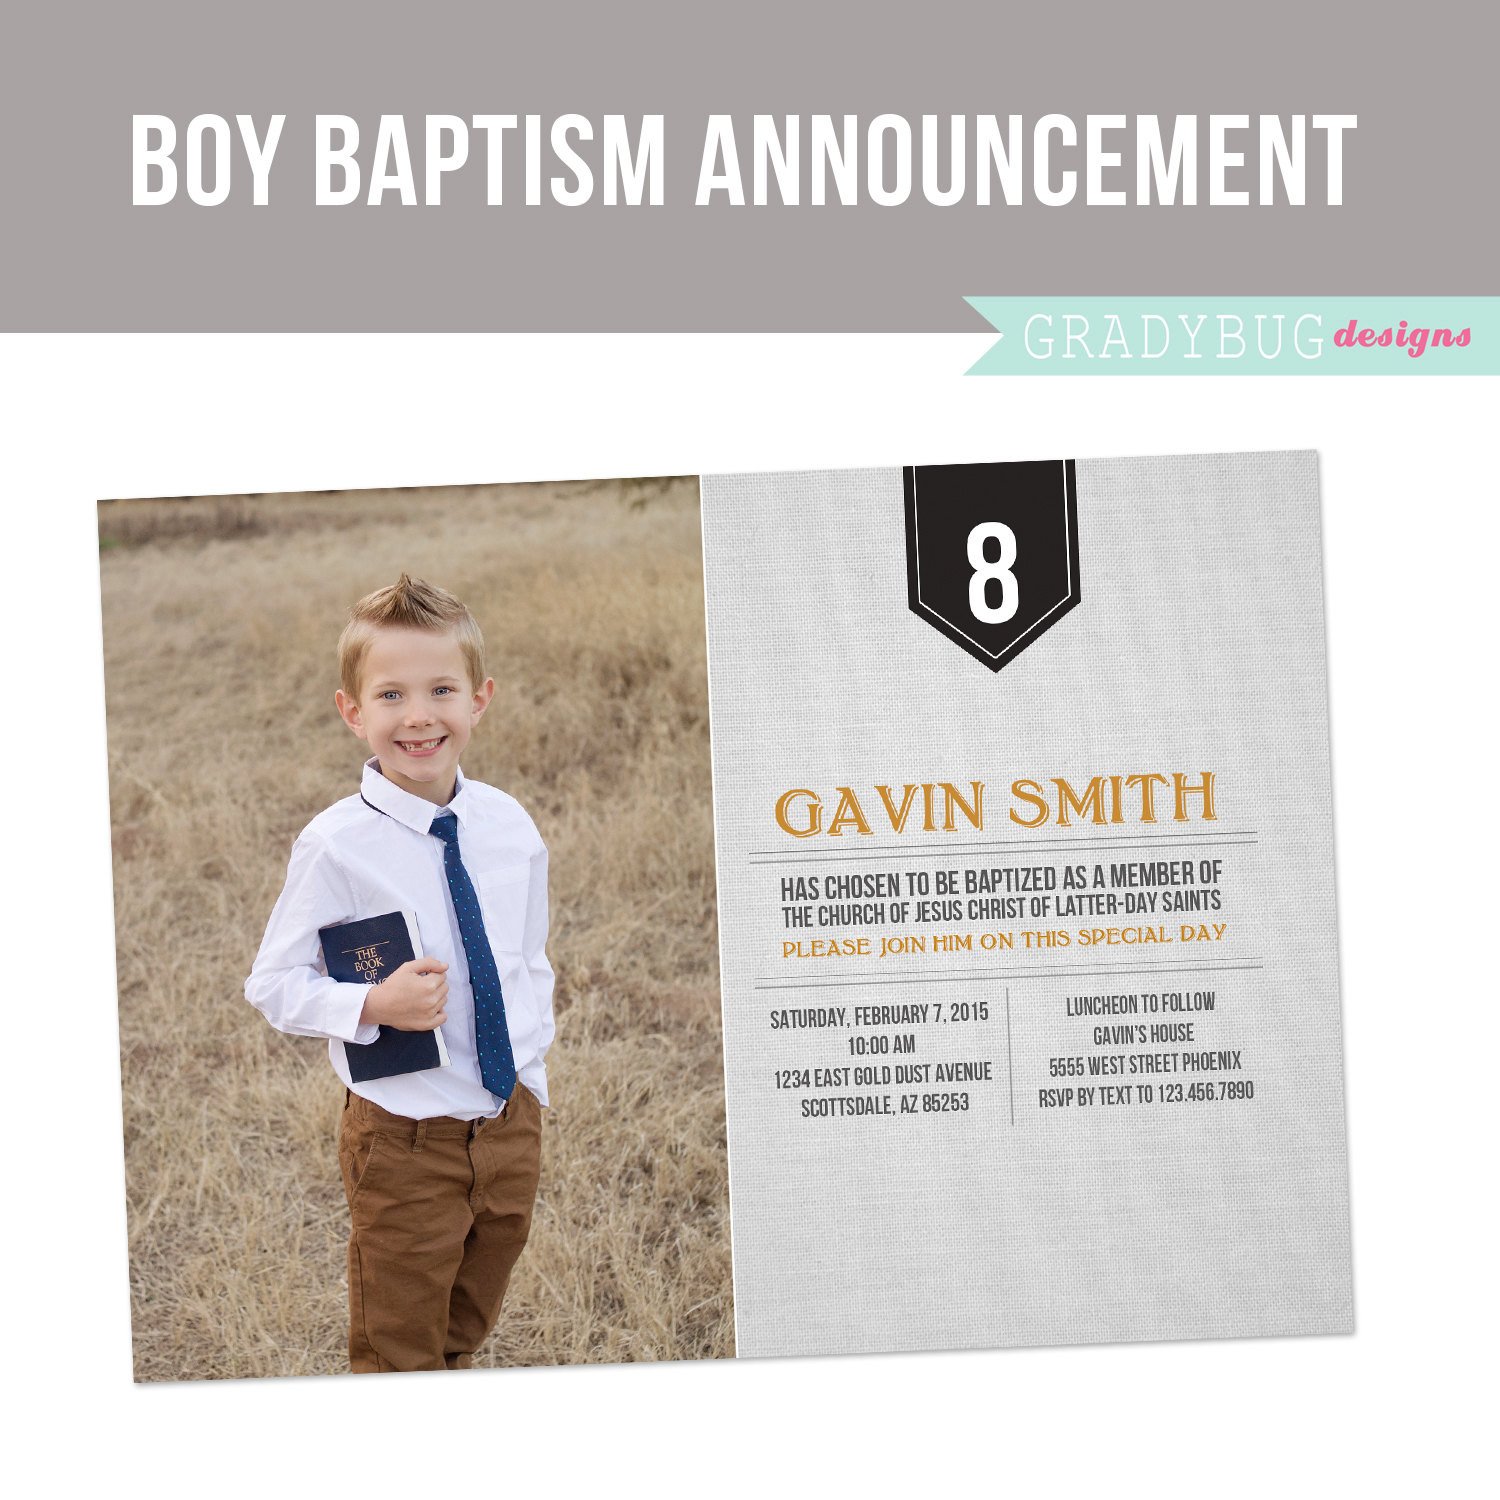 LDS Baptism Invitation Boys Baptism by gradybugdesigns on Etsy